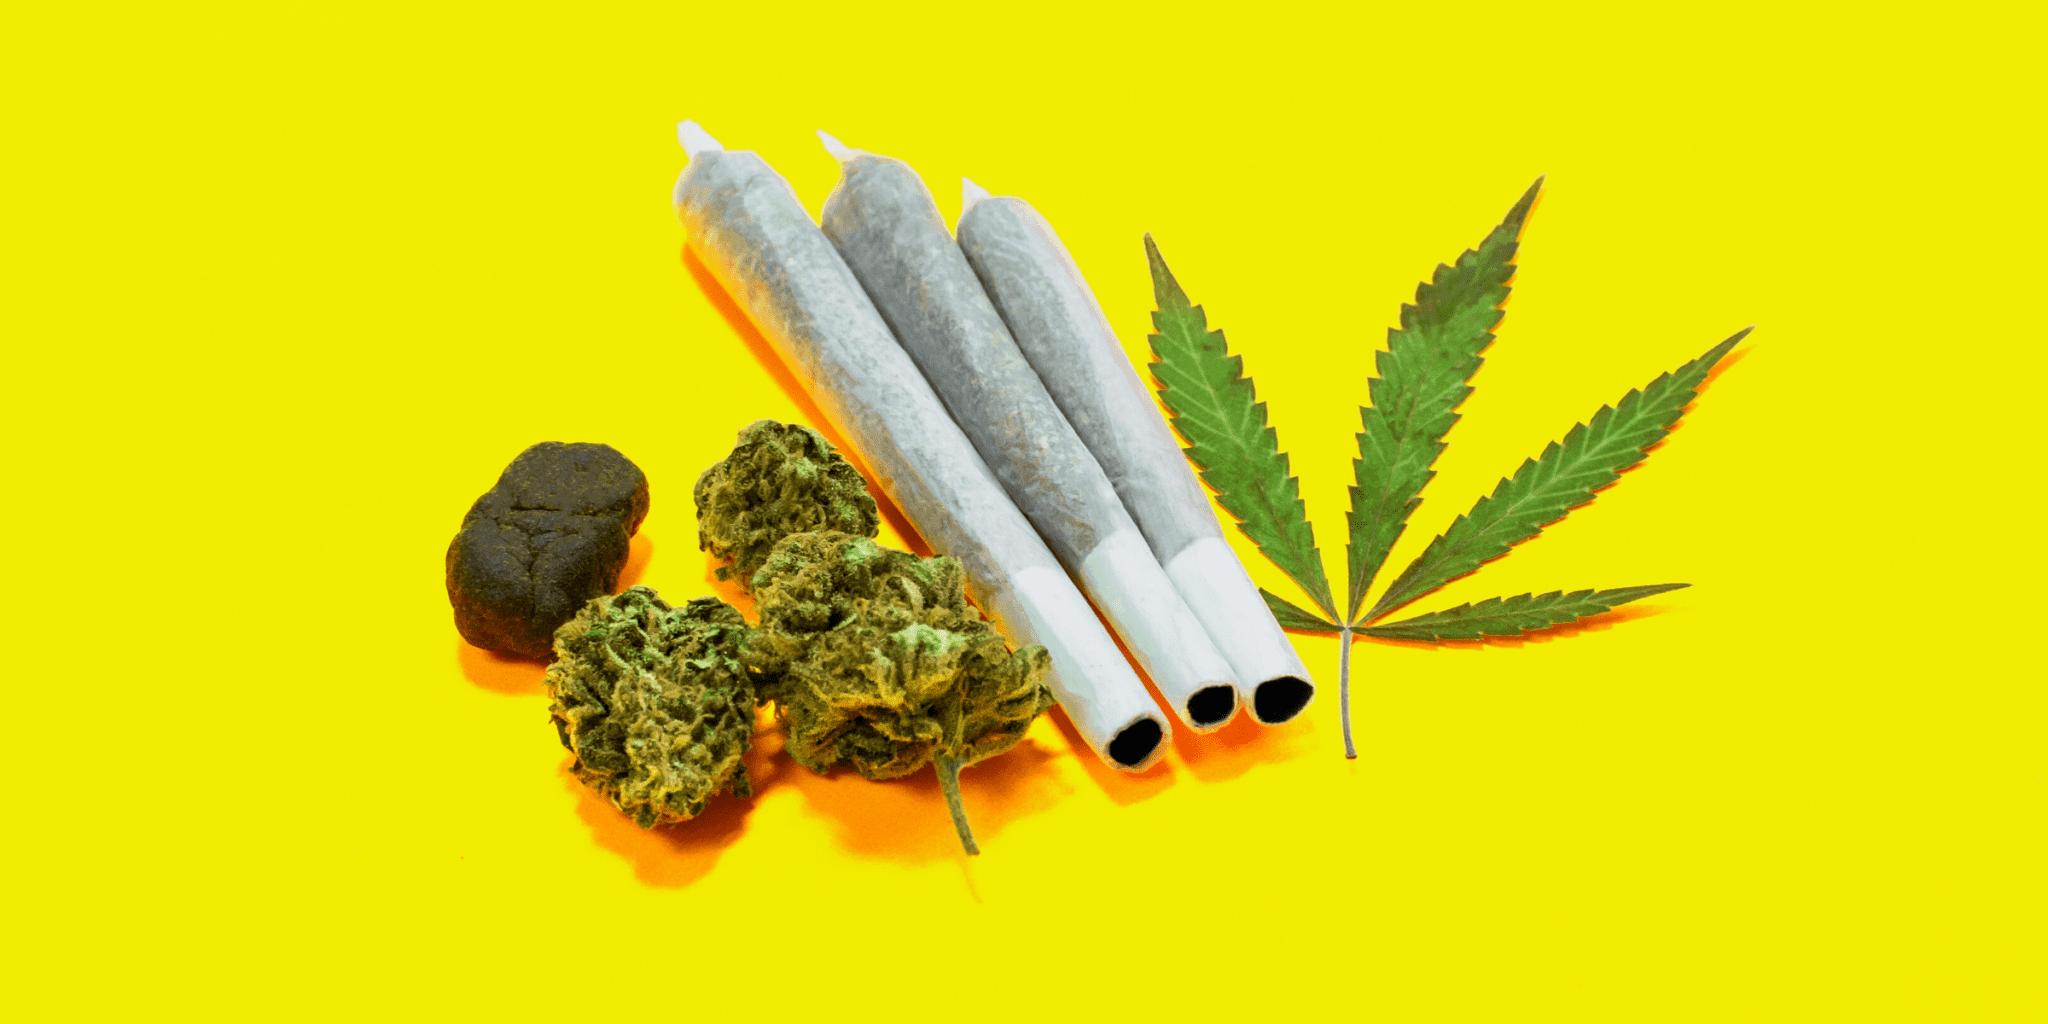 marijuana joints are one way to smoke cannabis